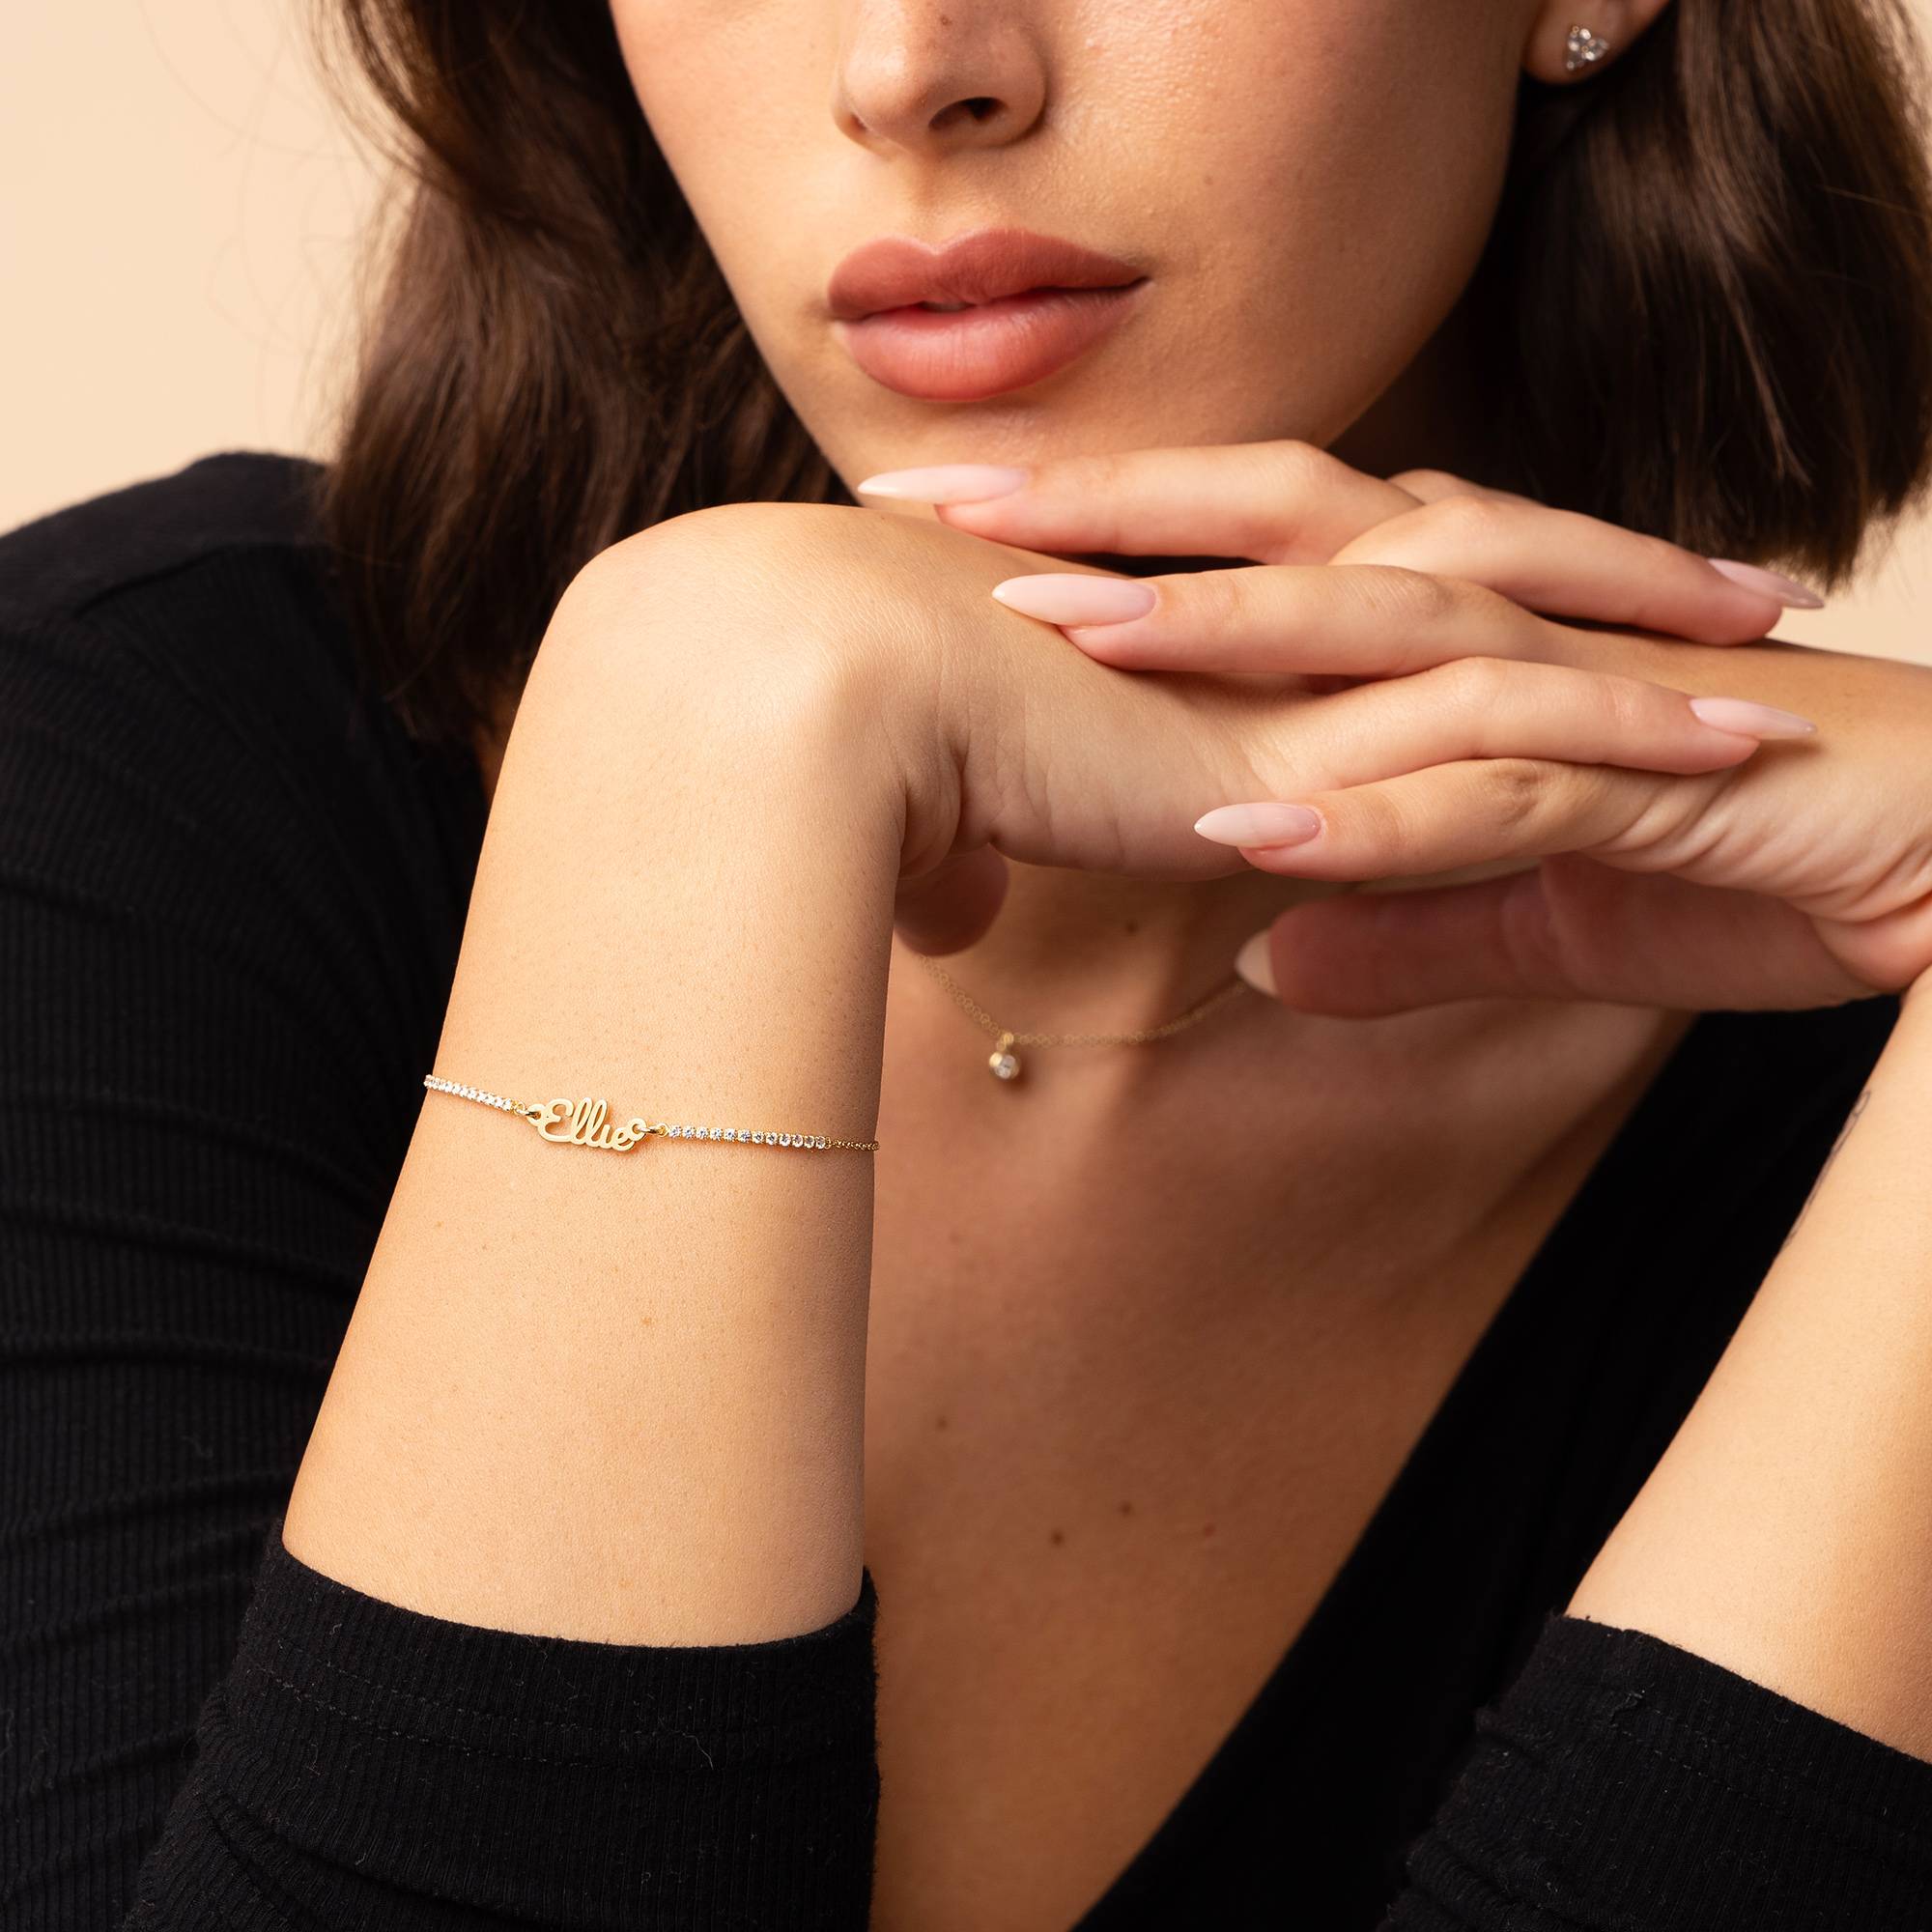 Kate Name Tennis Bracelet in 18K Gold Vermeil-4 product photo